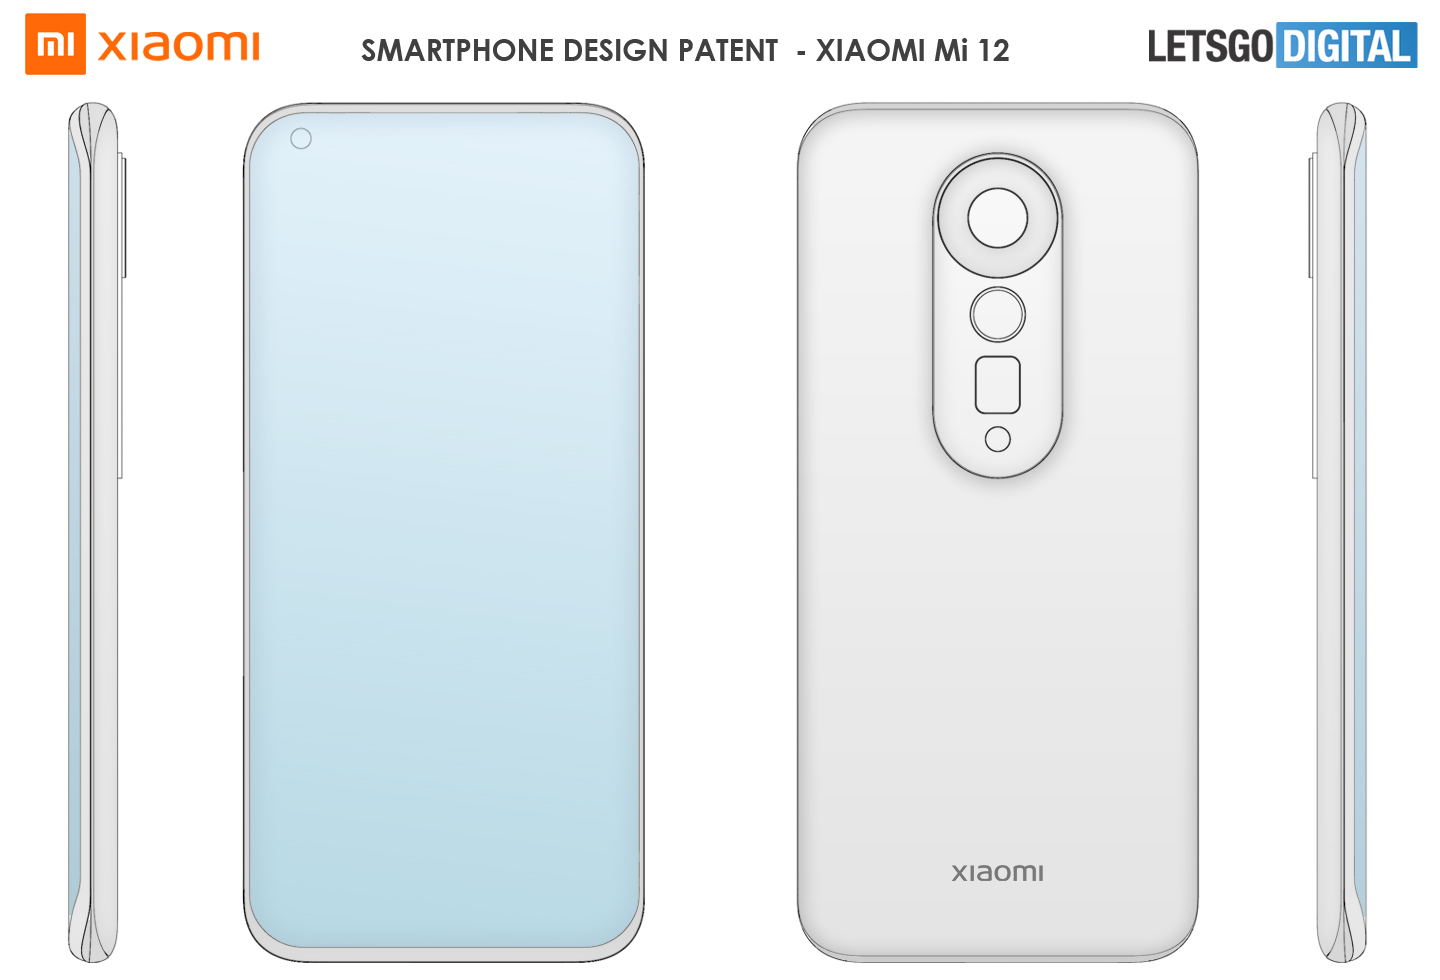 Xiaomi smartphone design patent